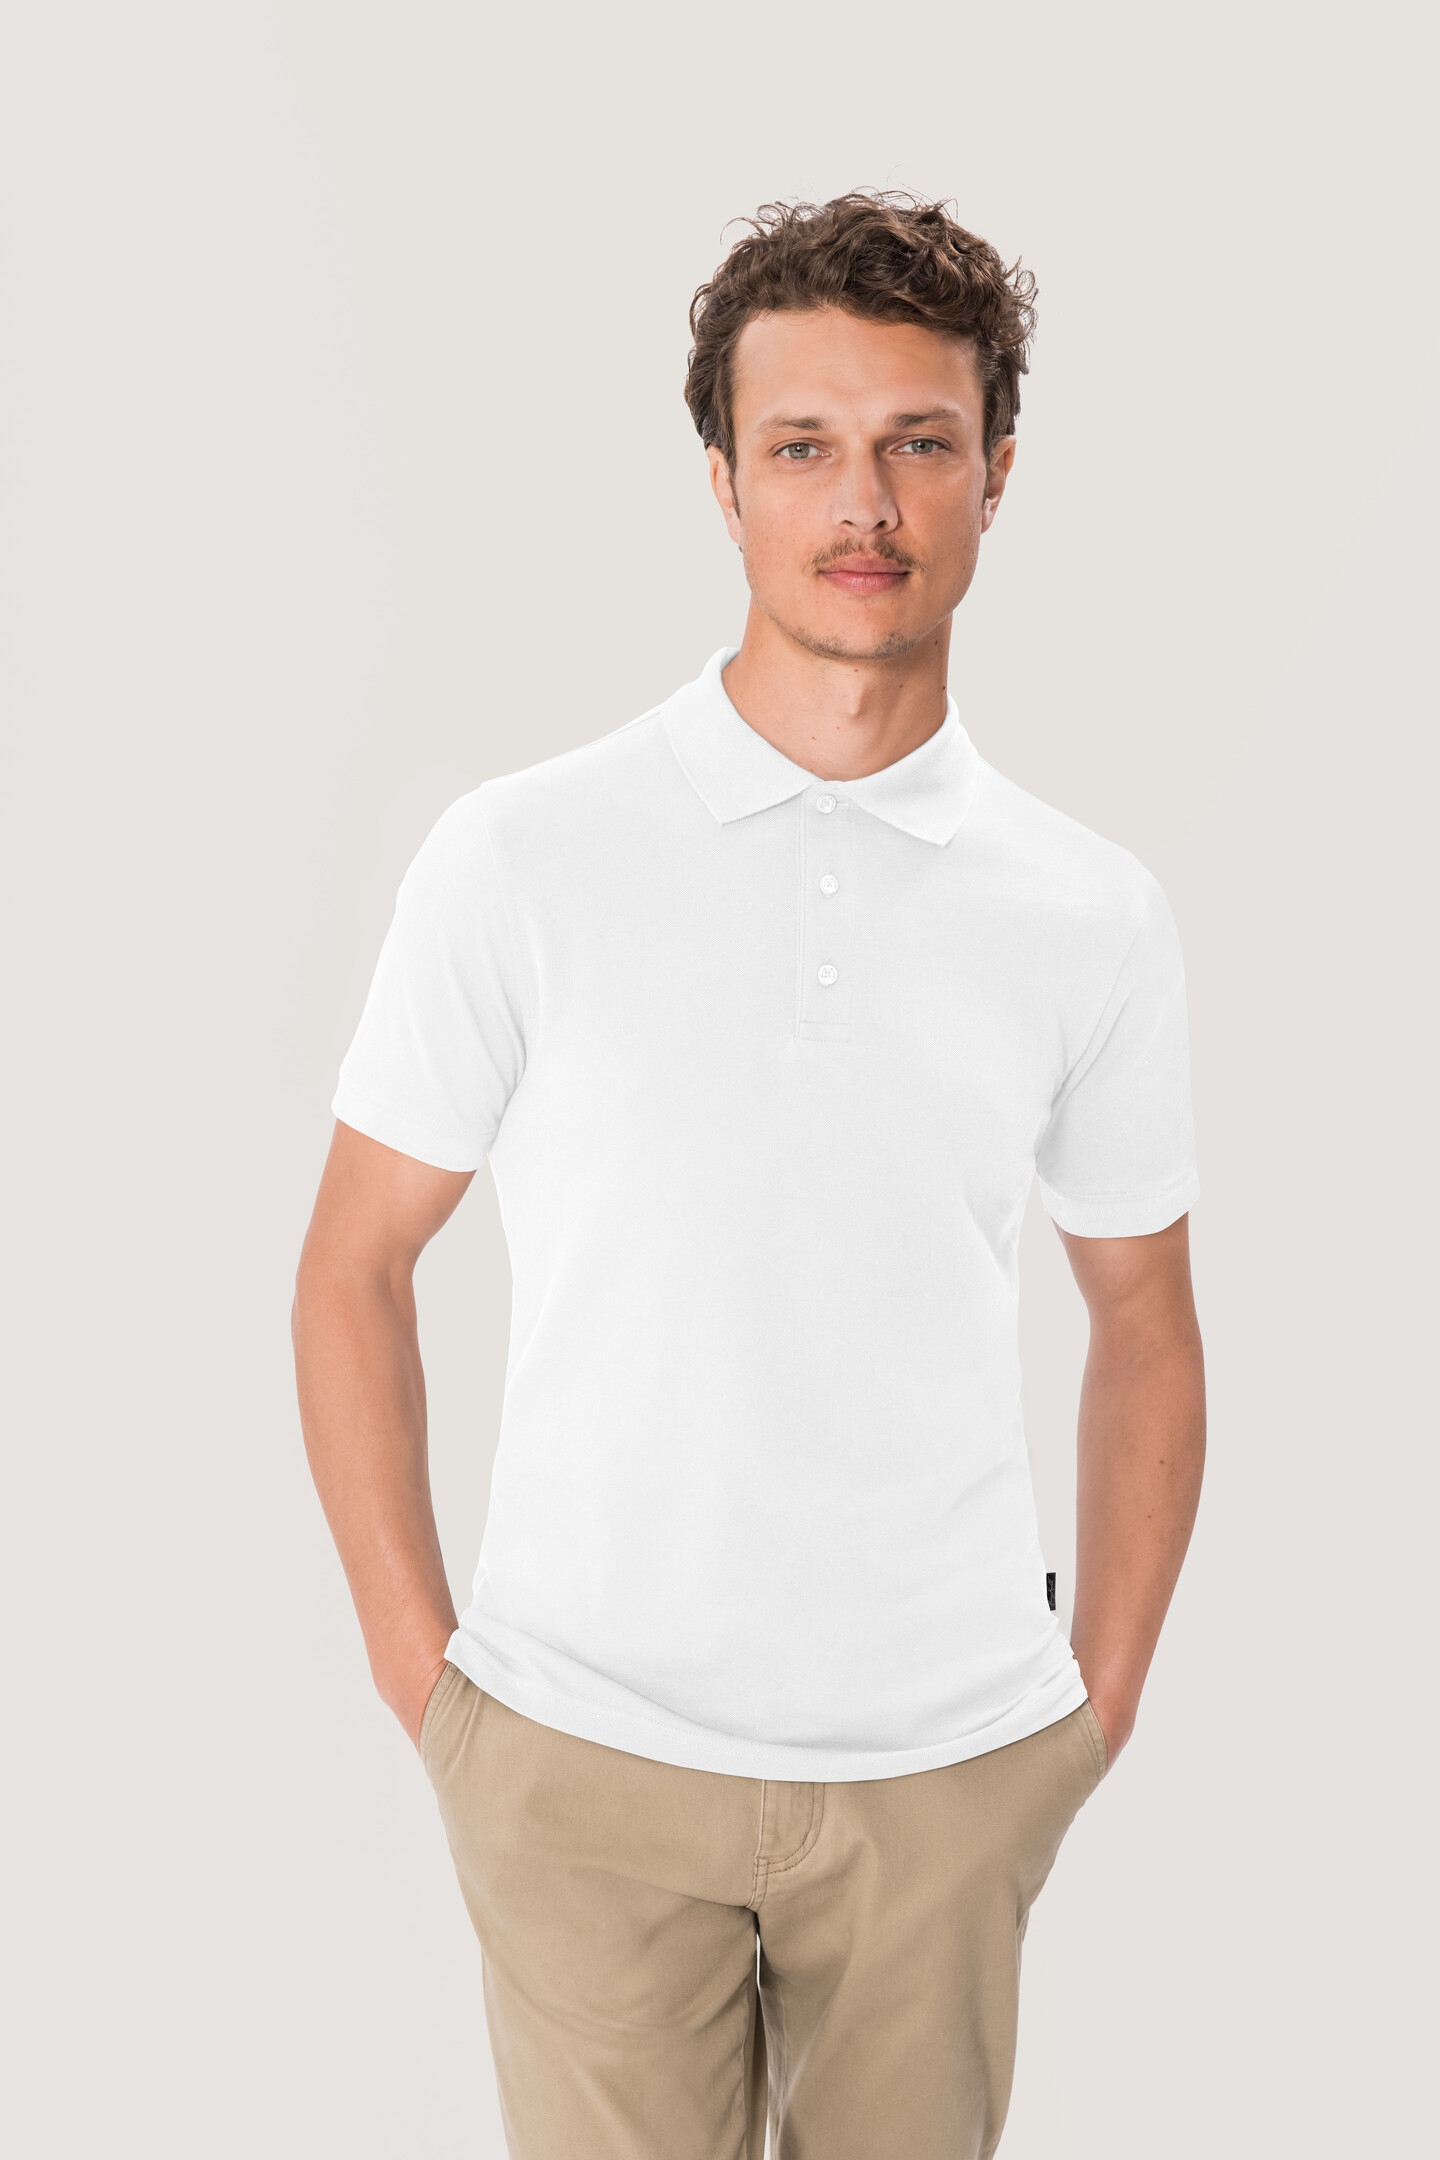 HAKRO Premium-Poloshirt 801 Pima-Cotton